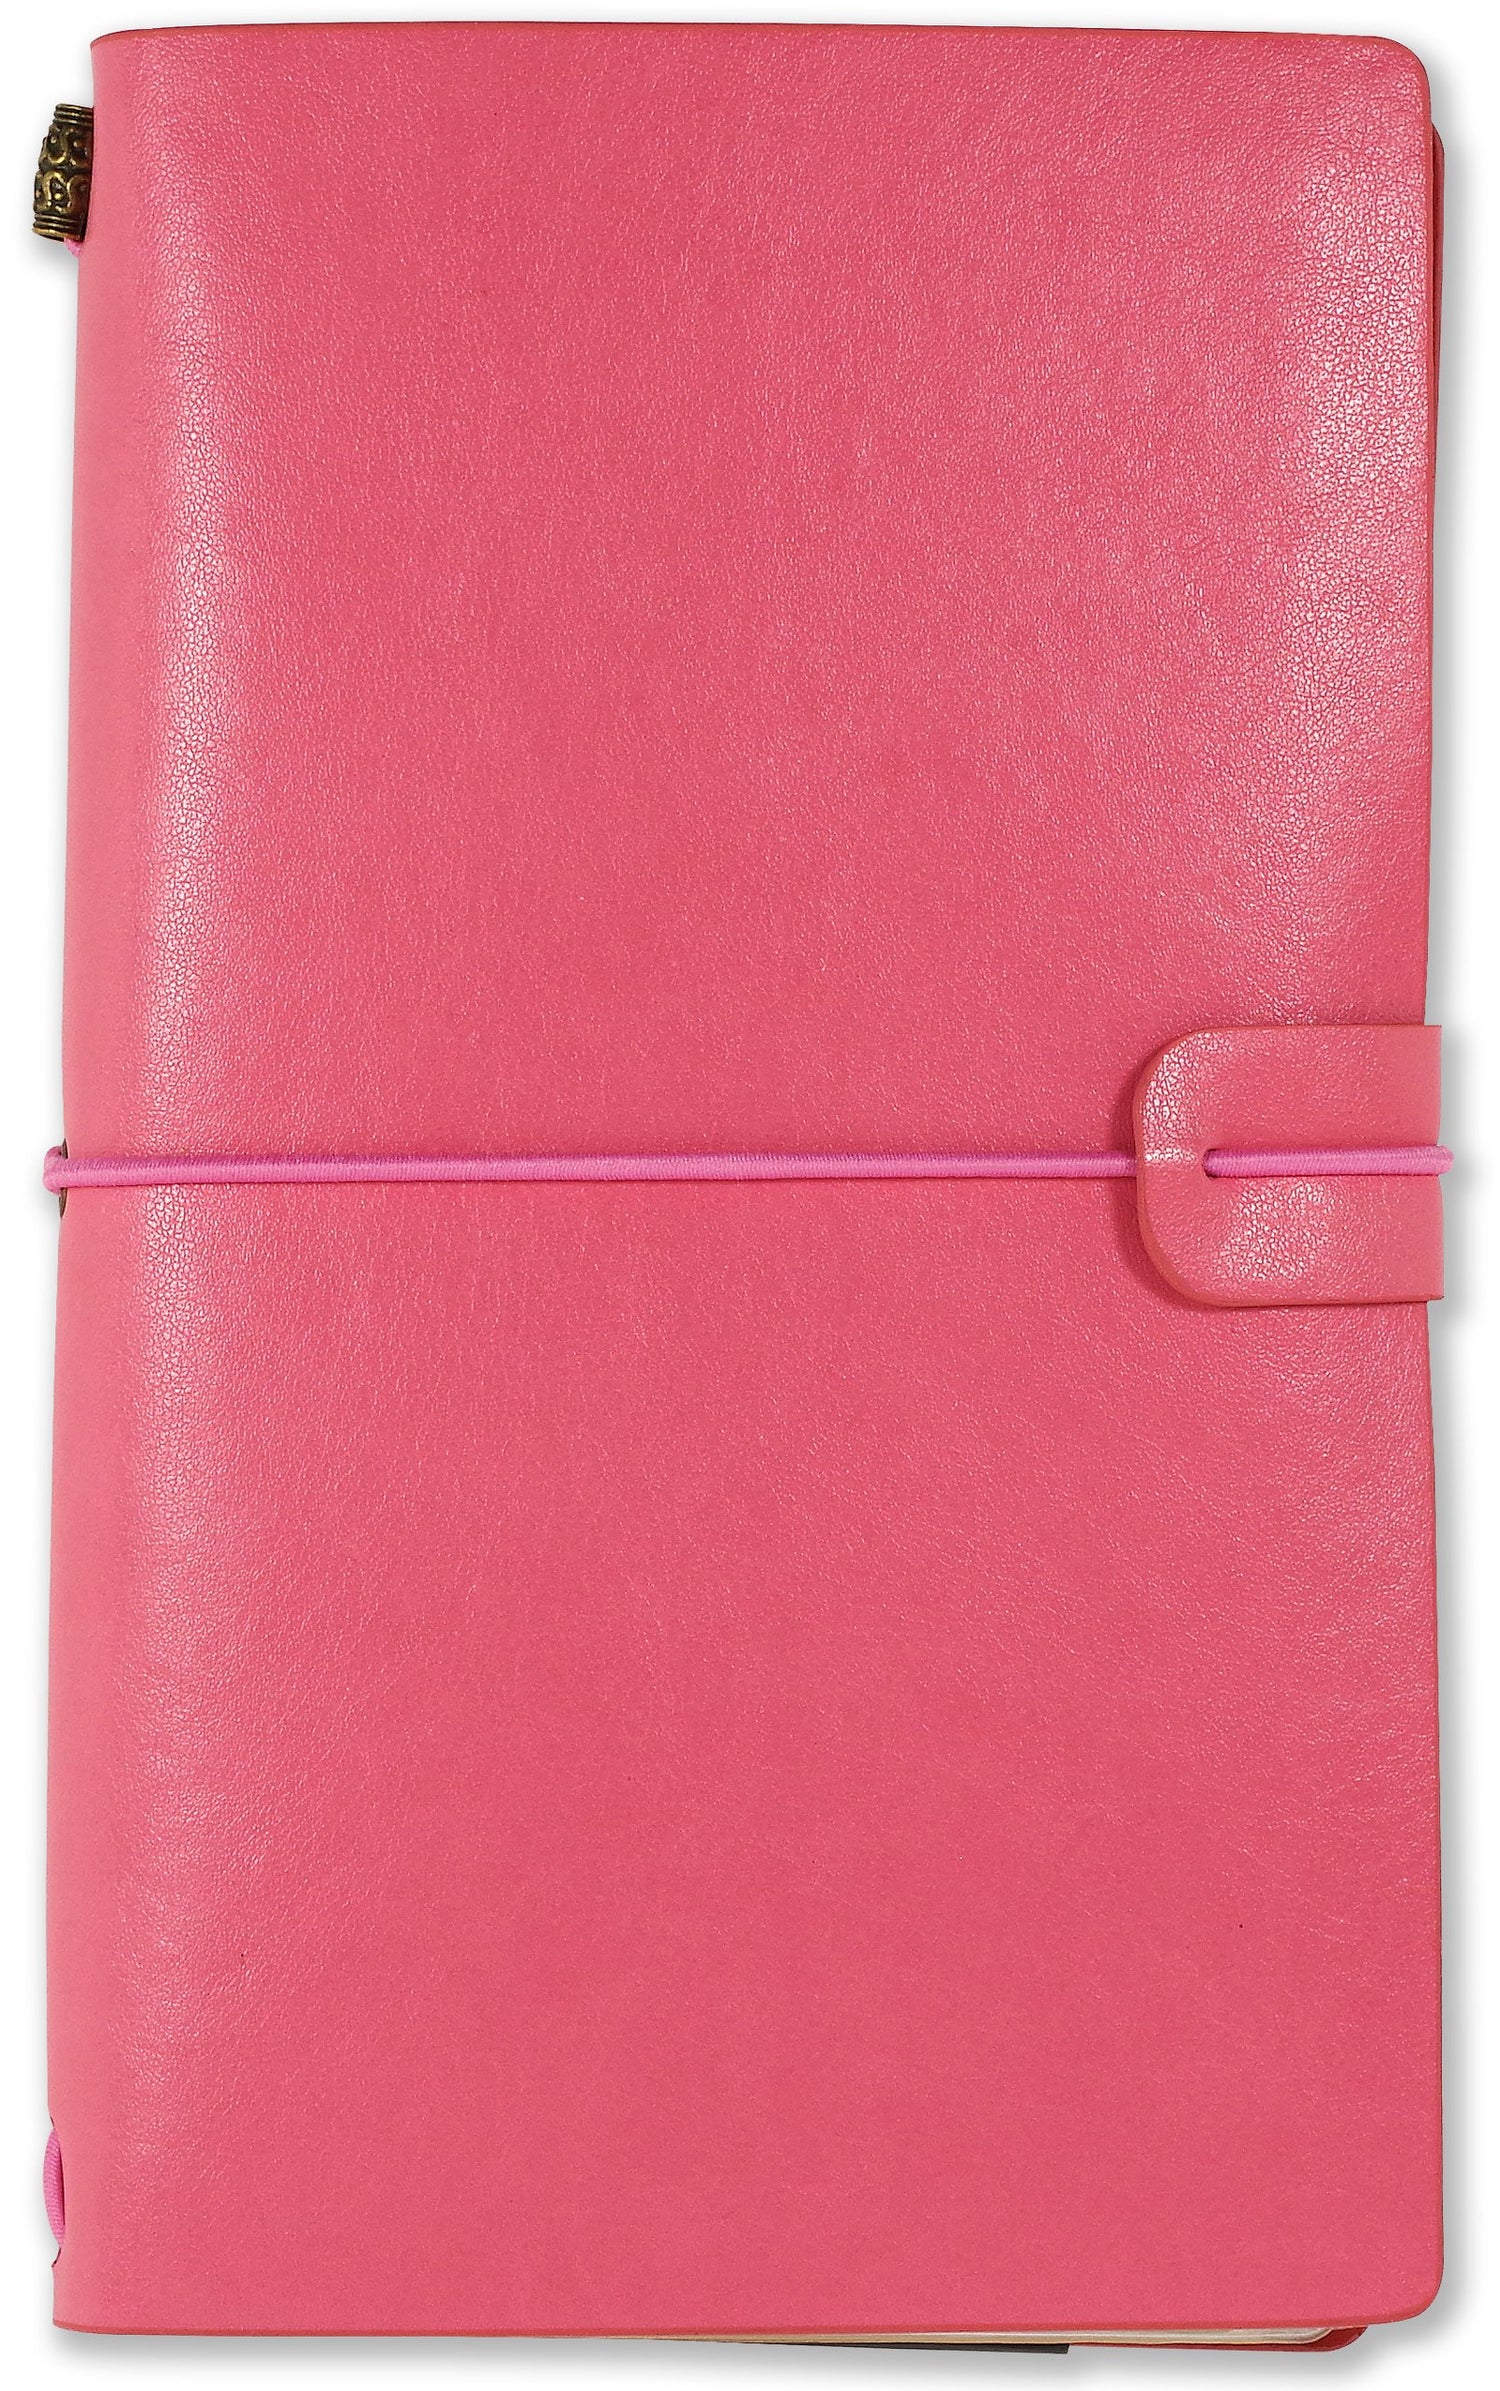 Travel Journal - Refillable Notebook